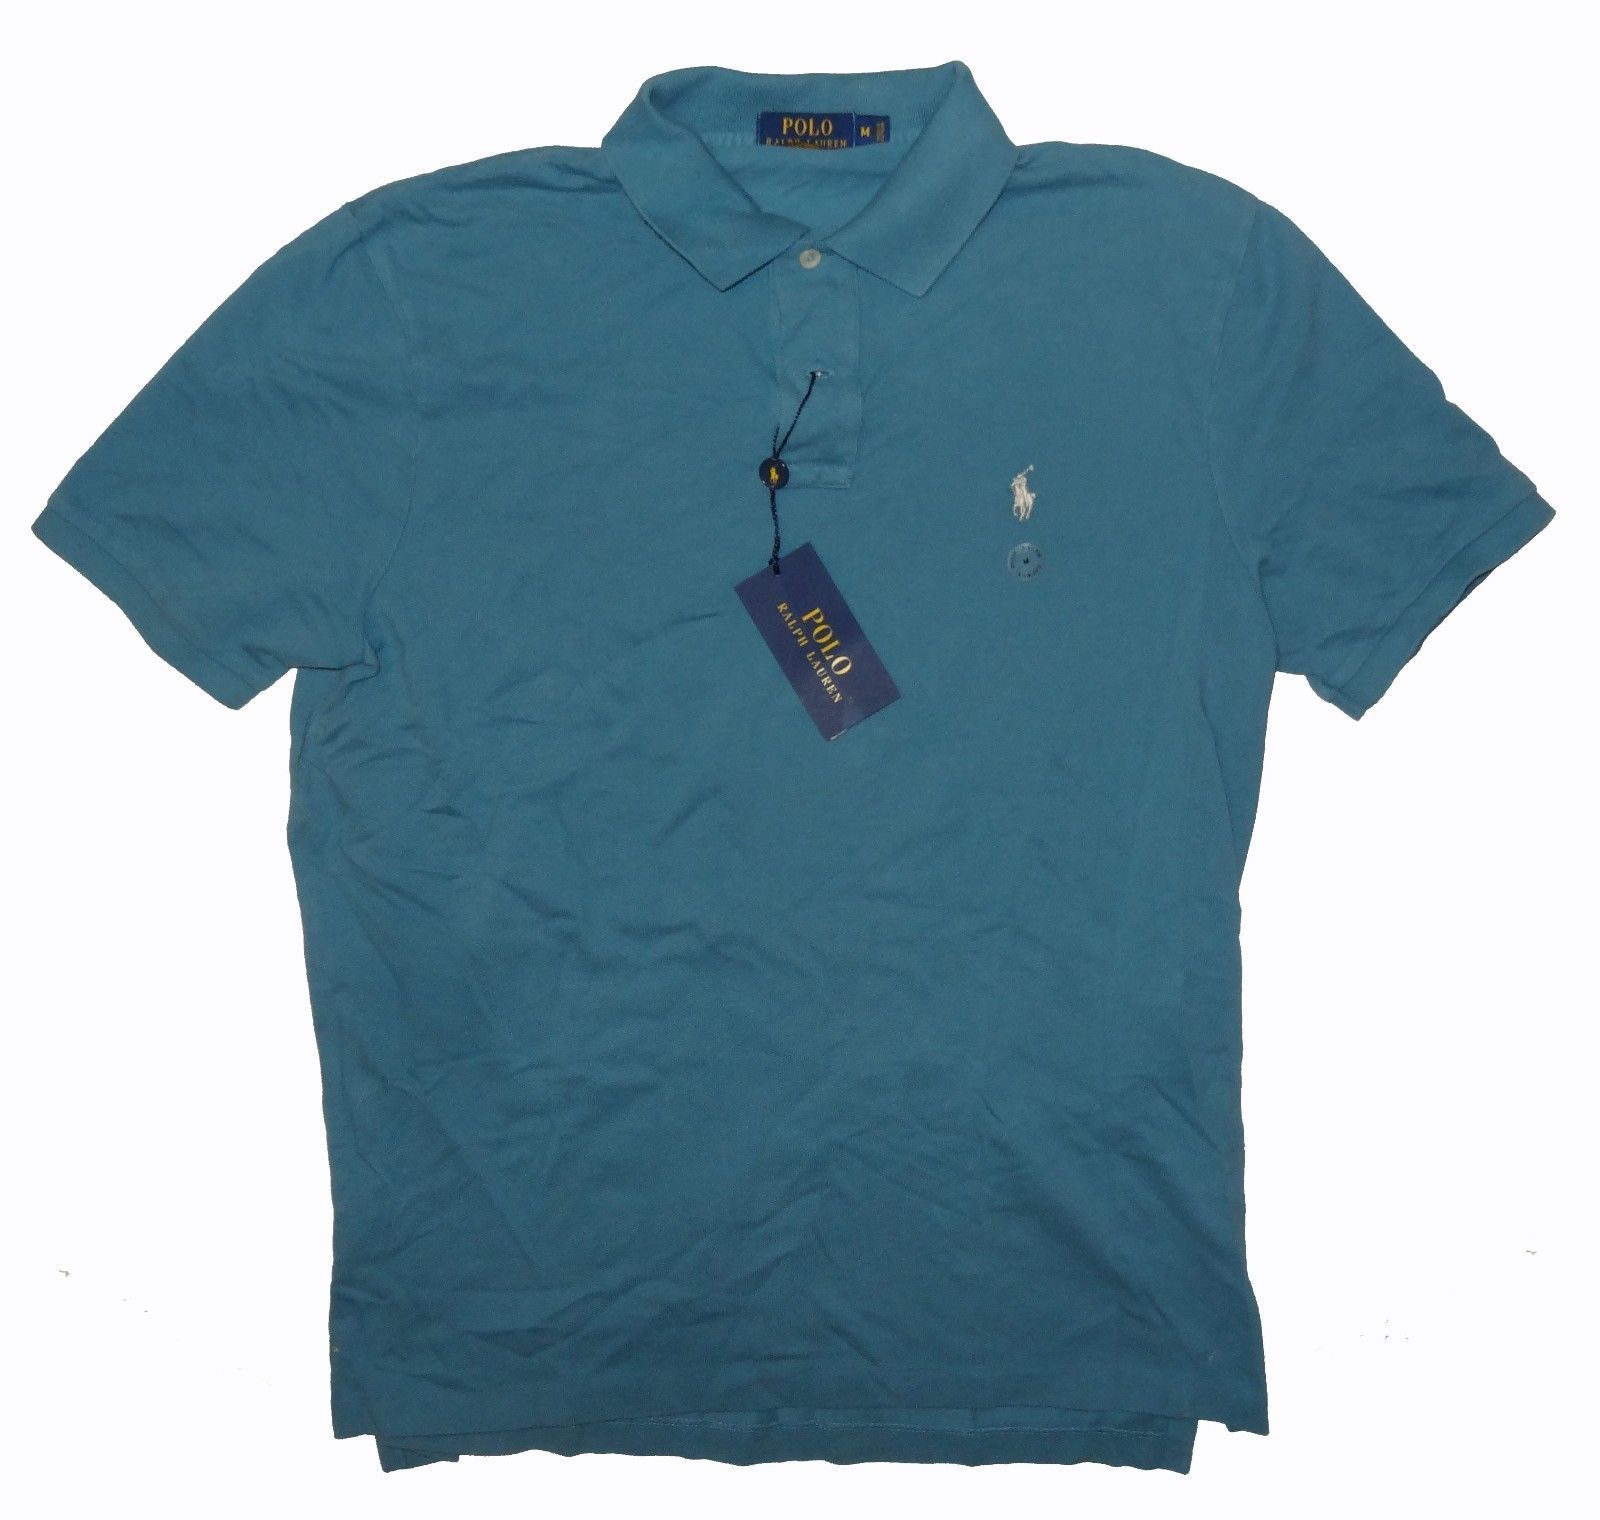 New Polo Ralph Lauren Short Sleeve Aqua Teal Shirt Men's XL Classic Fit - $36.84